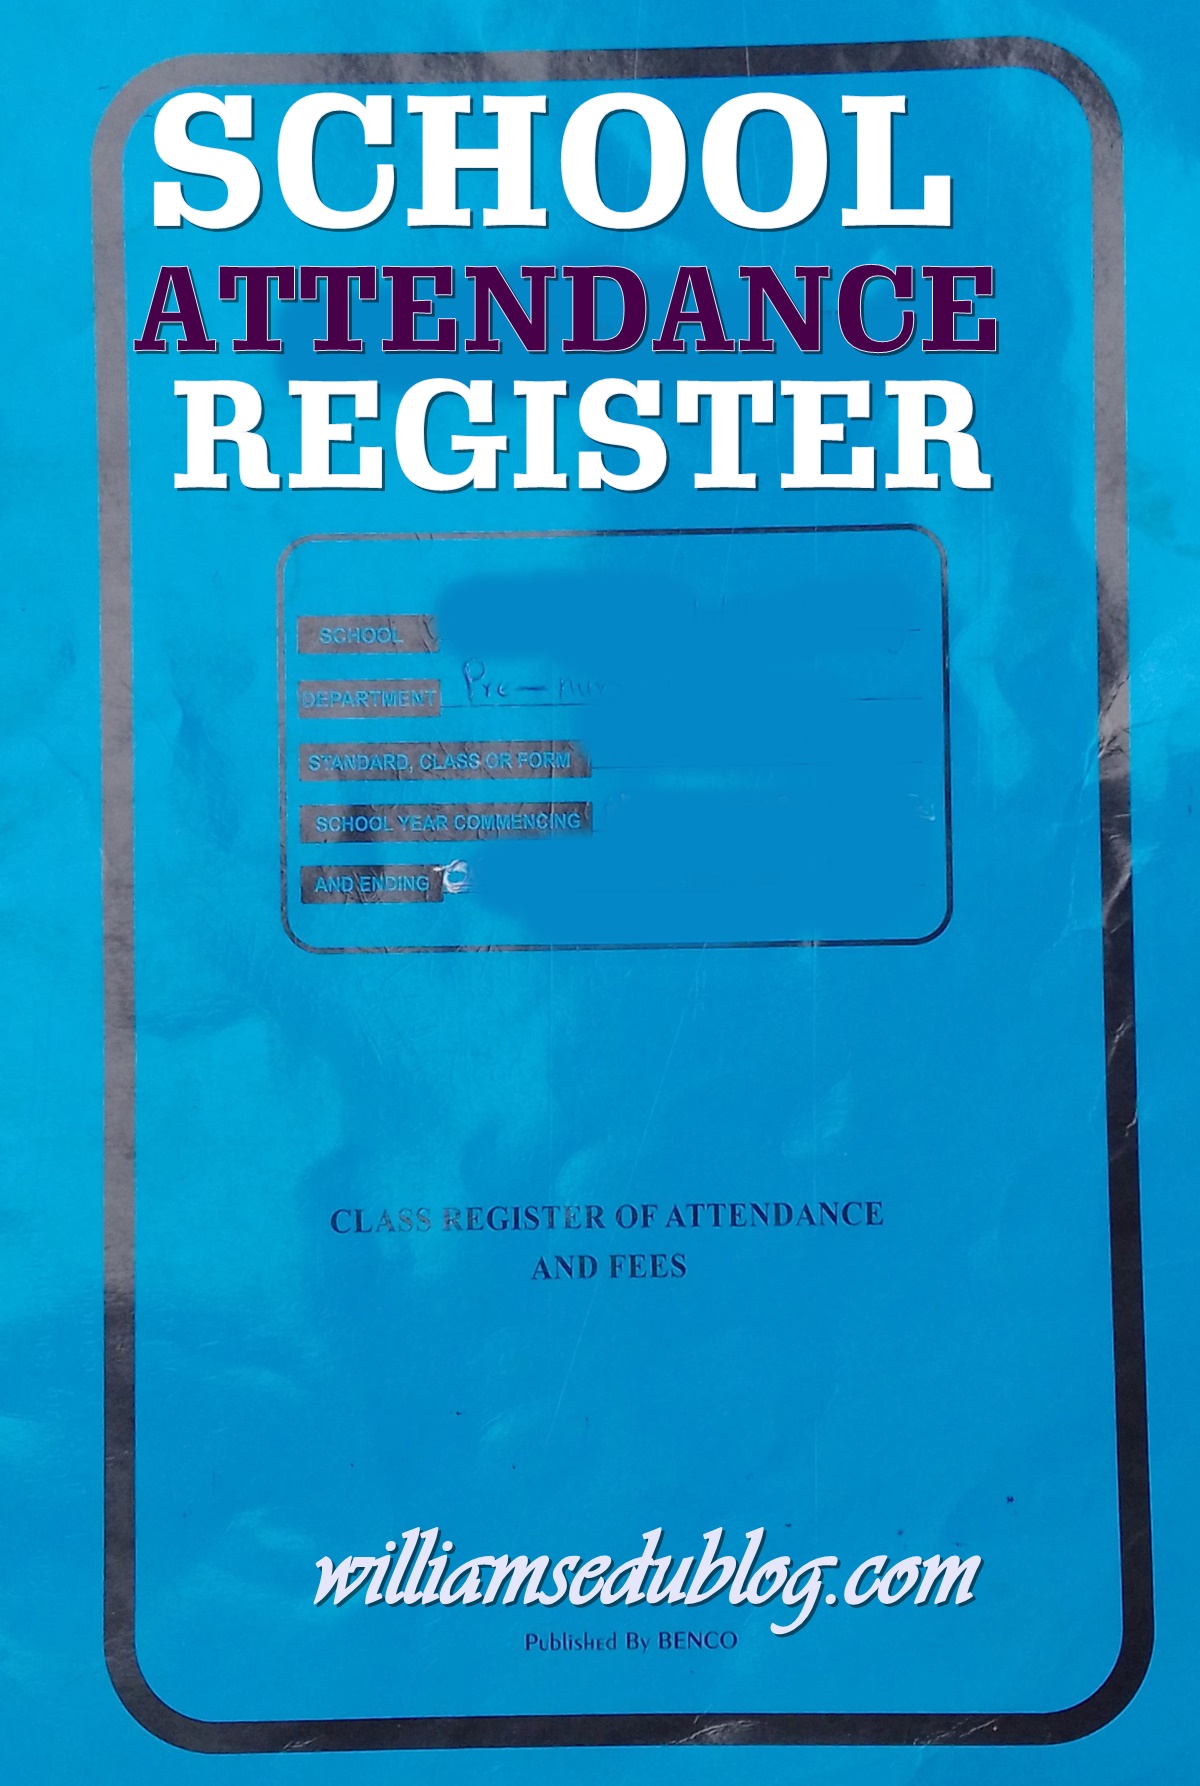 School attendance register